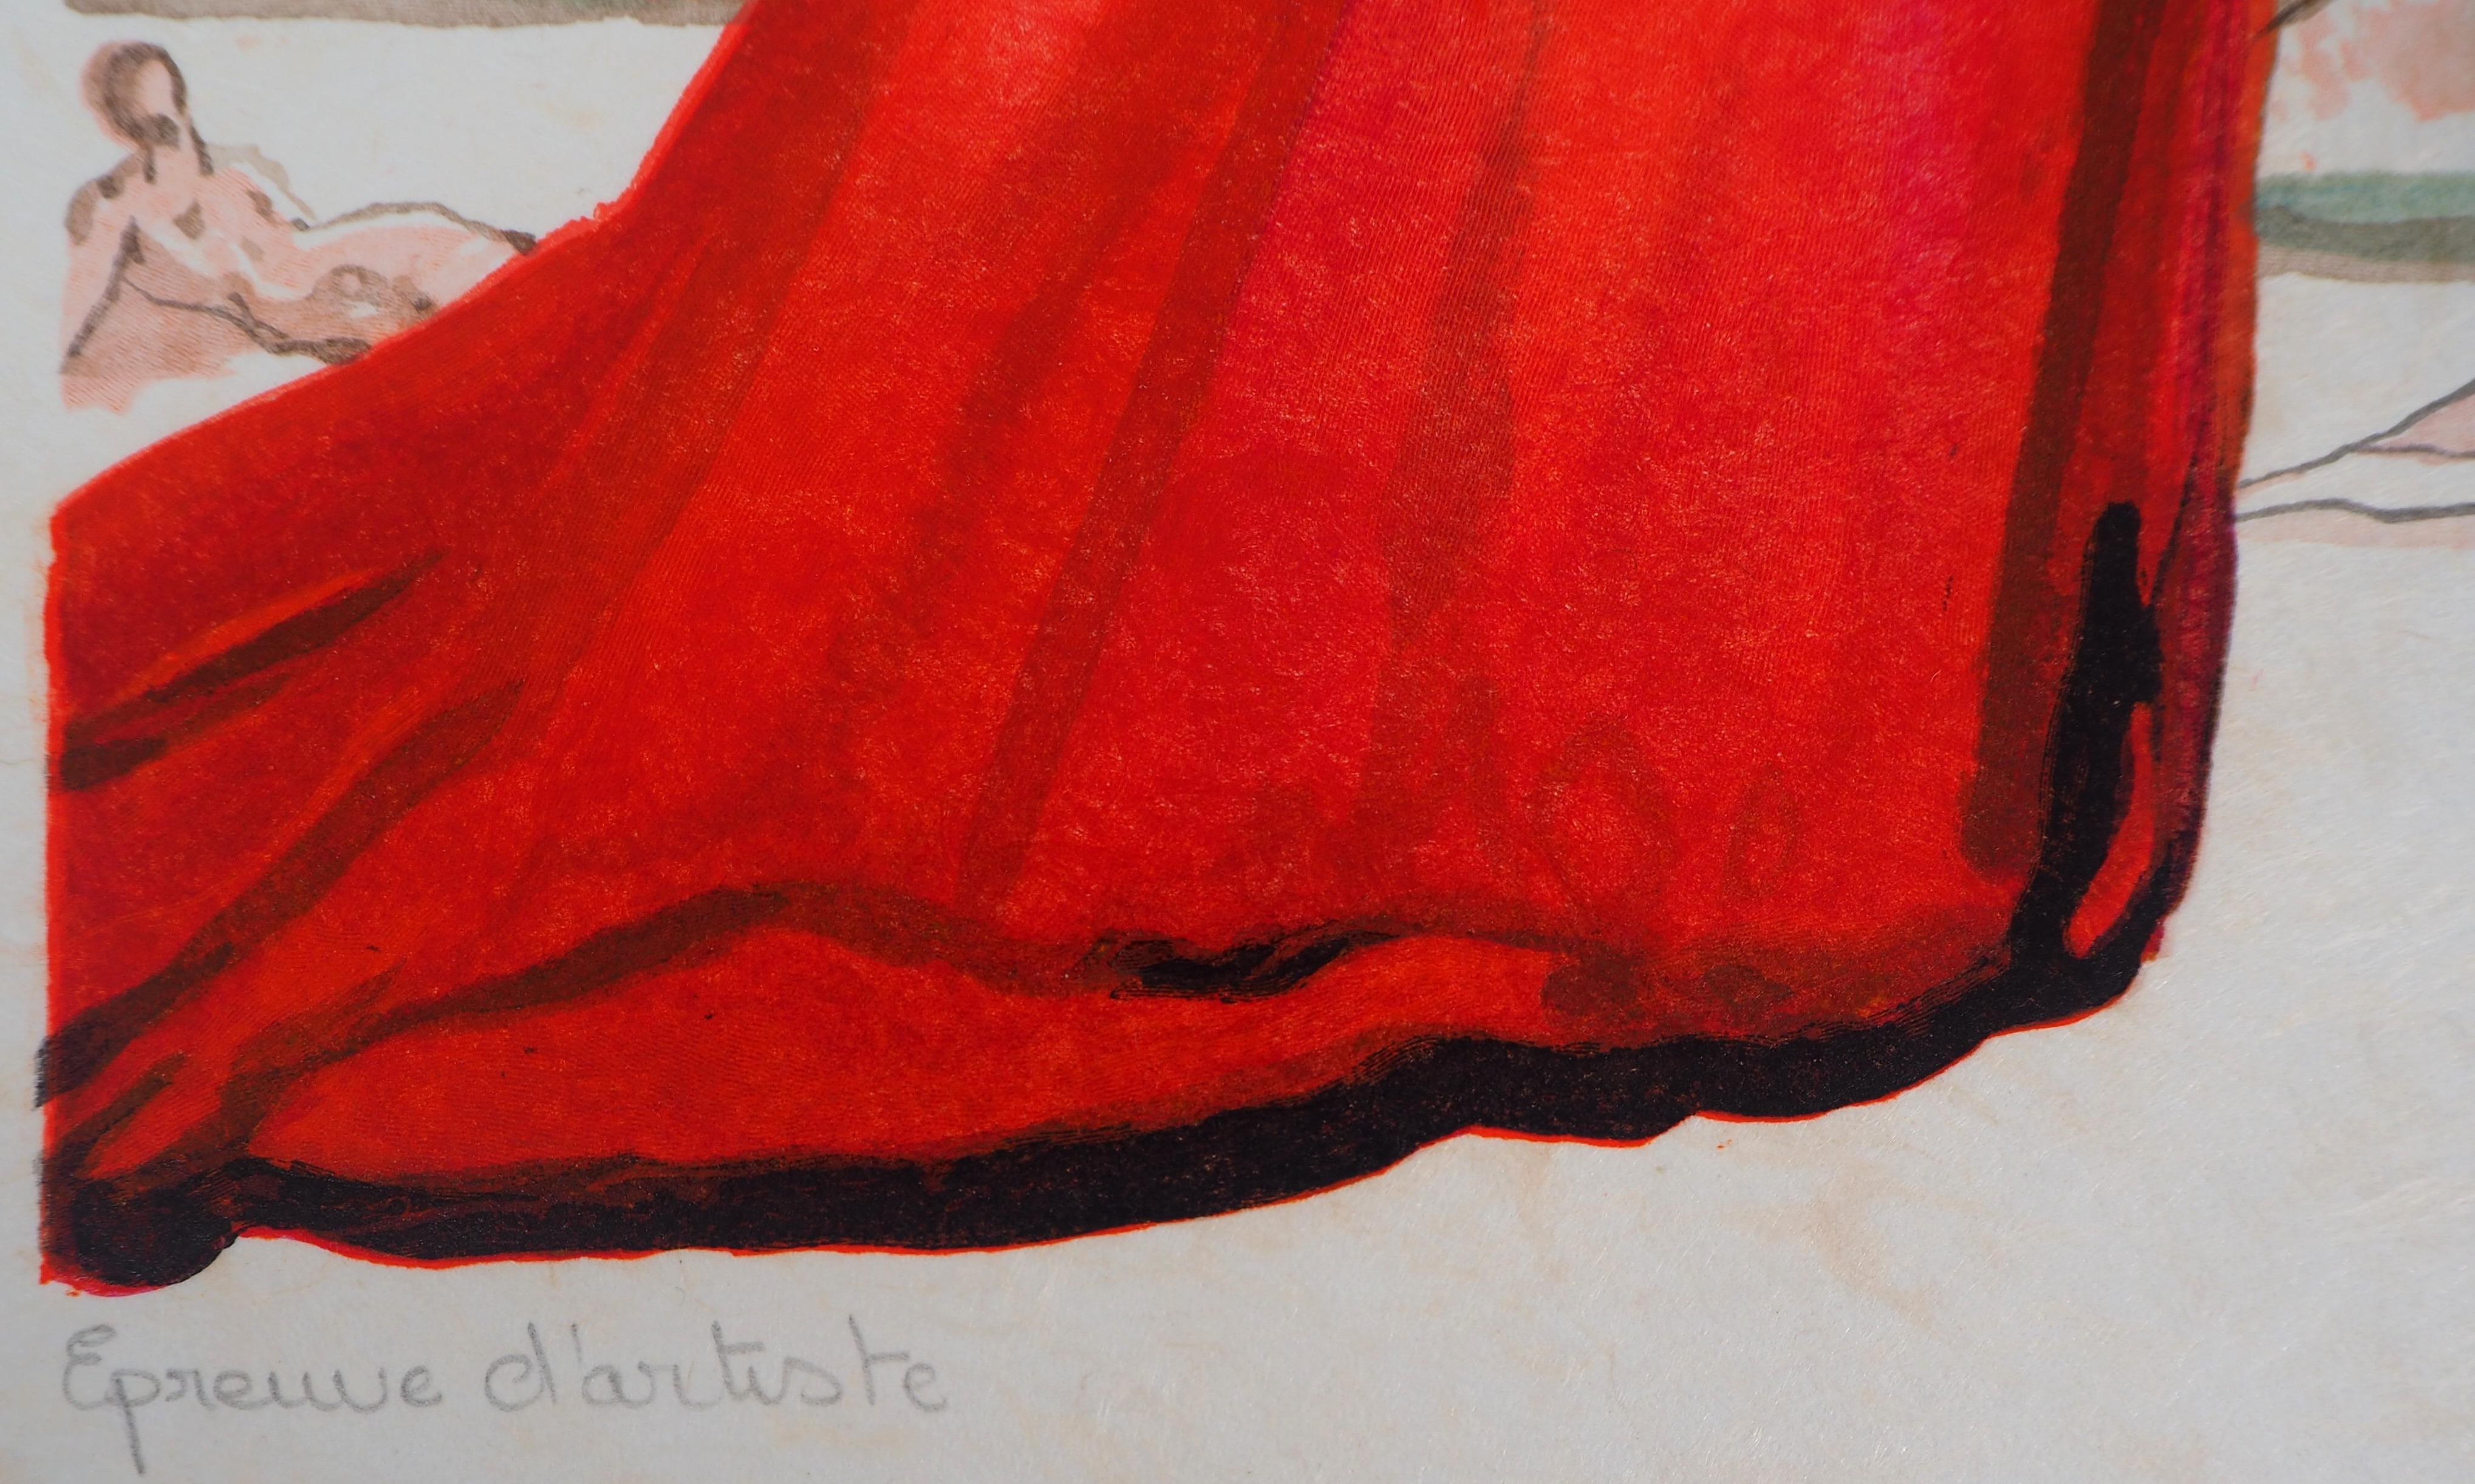 Pilade Loves Hermione - Original Woodcut, Handsigned (Field #79-2 K) - Surrealist Print by Salvador Dalí